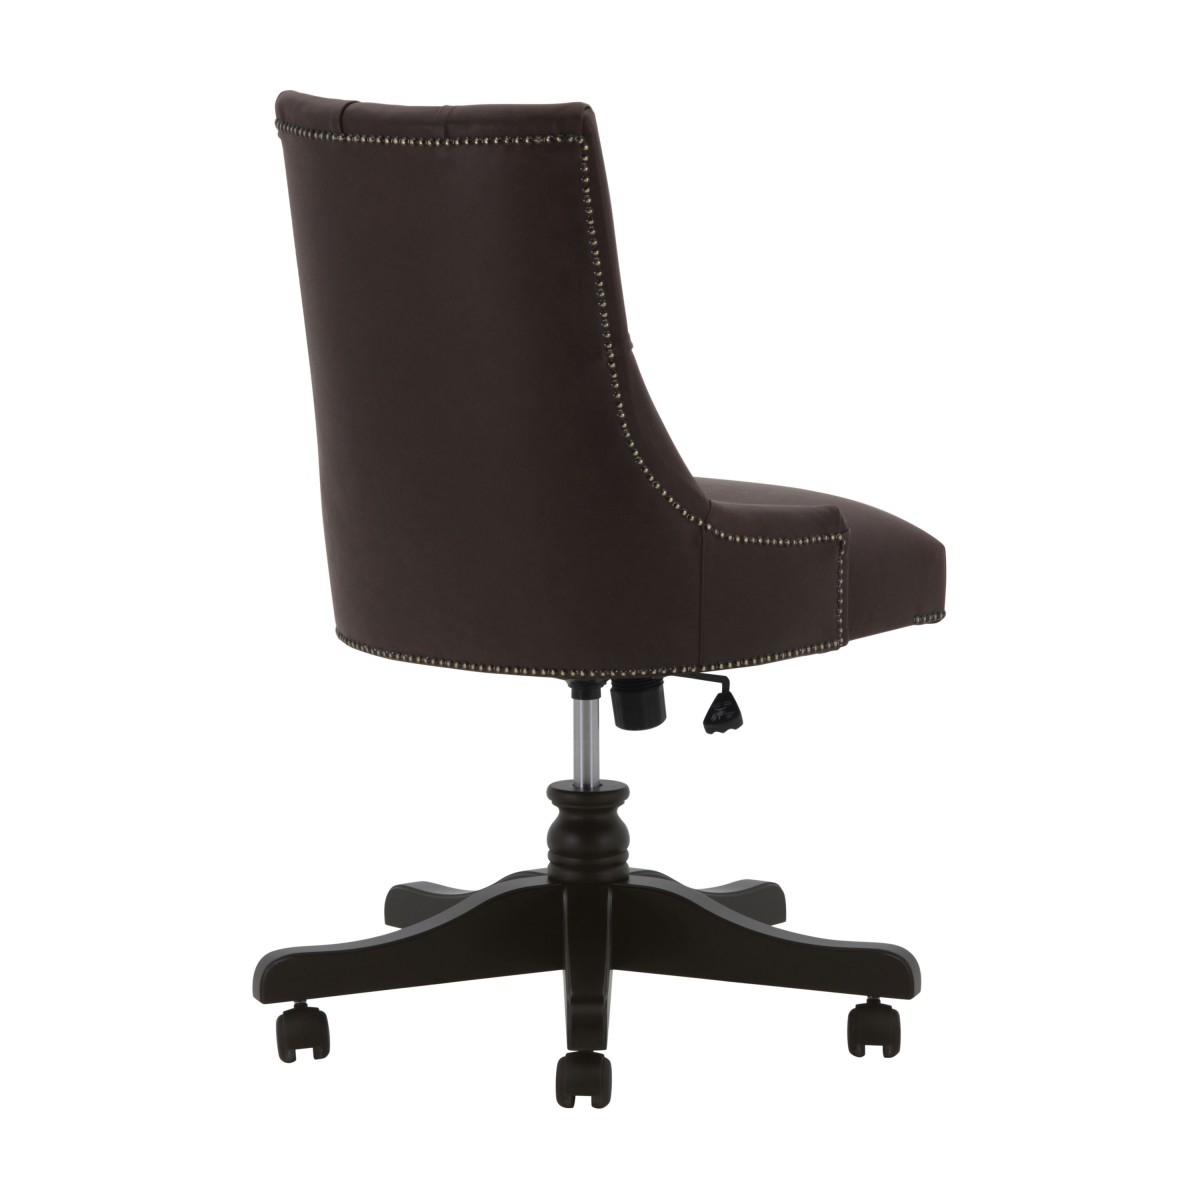 leather swivel chair edward 2 3562